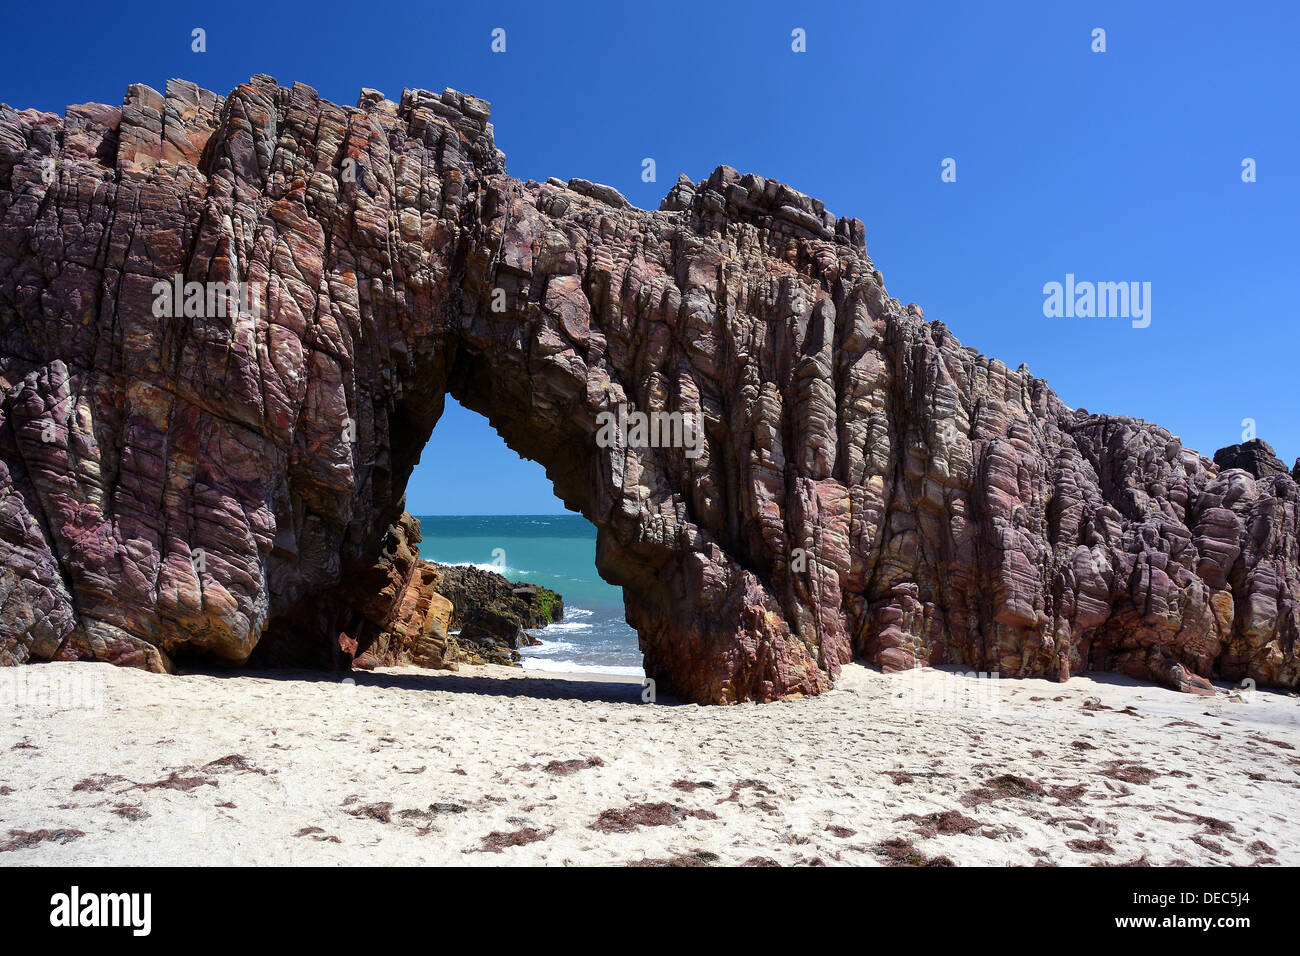 Arco di roccia sulla spiaggia, Jericoacoara, Ceará, Brasile Foto Stock